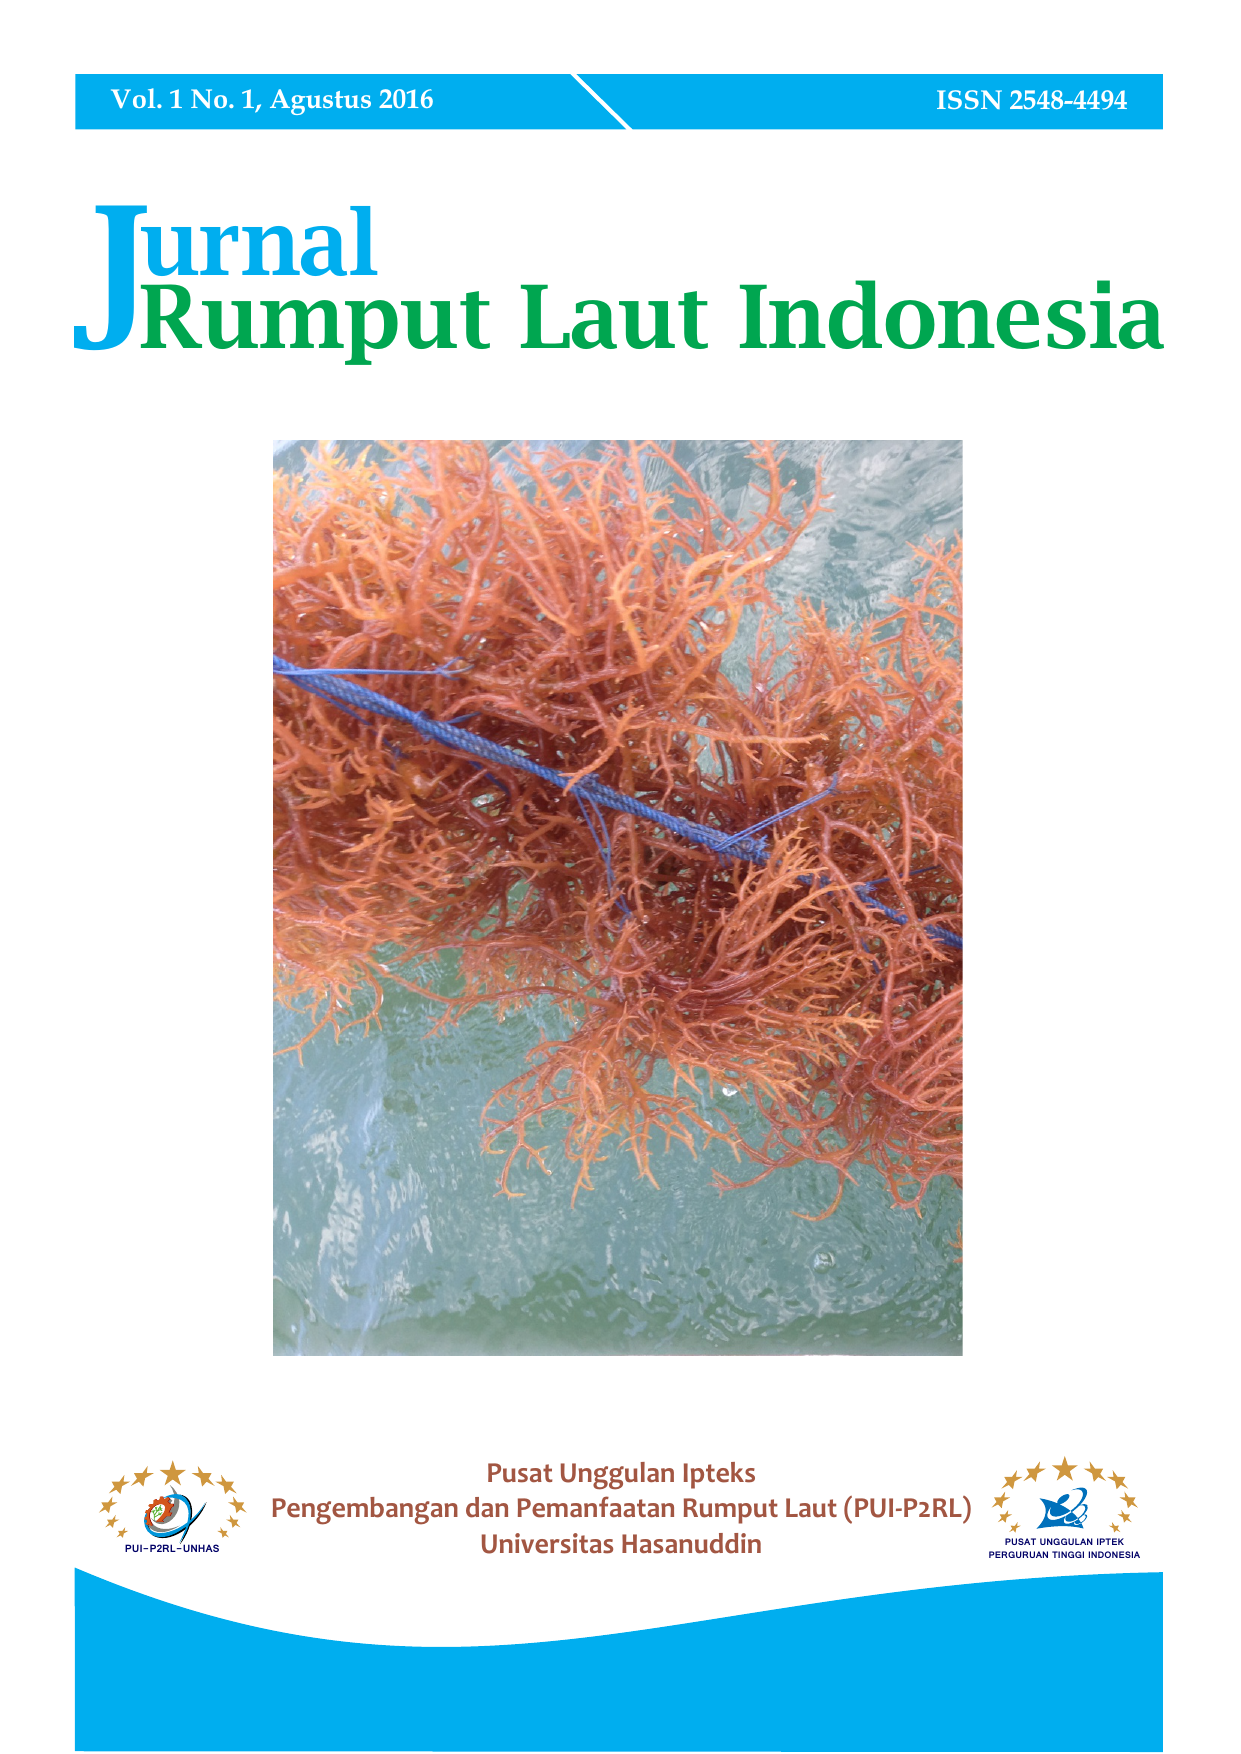 Cover Jurnal Vol 1 No 1.cdr Jurnal Rumput Laut Indonesia